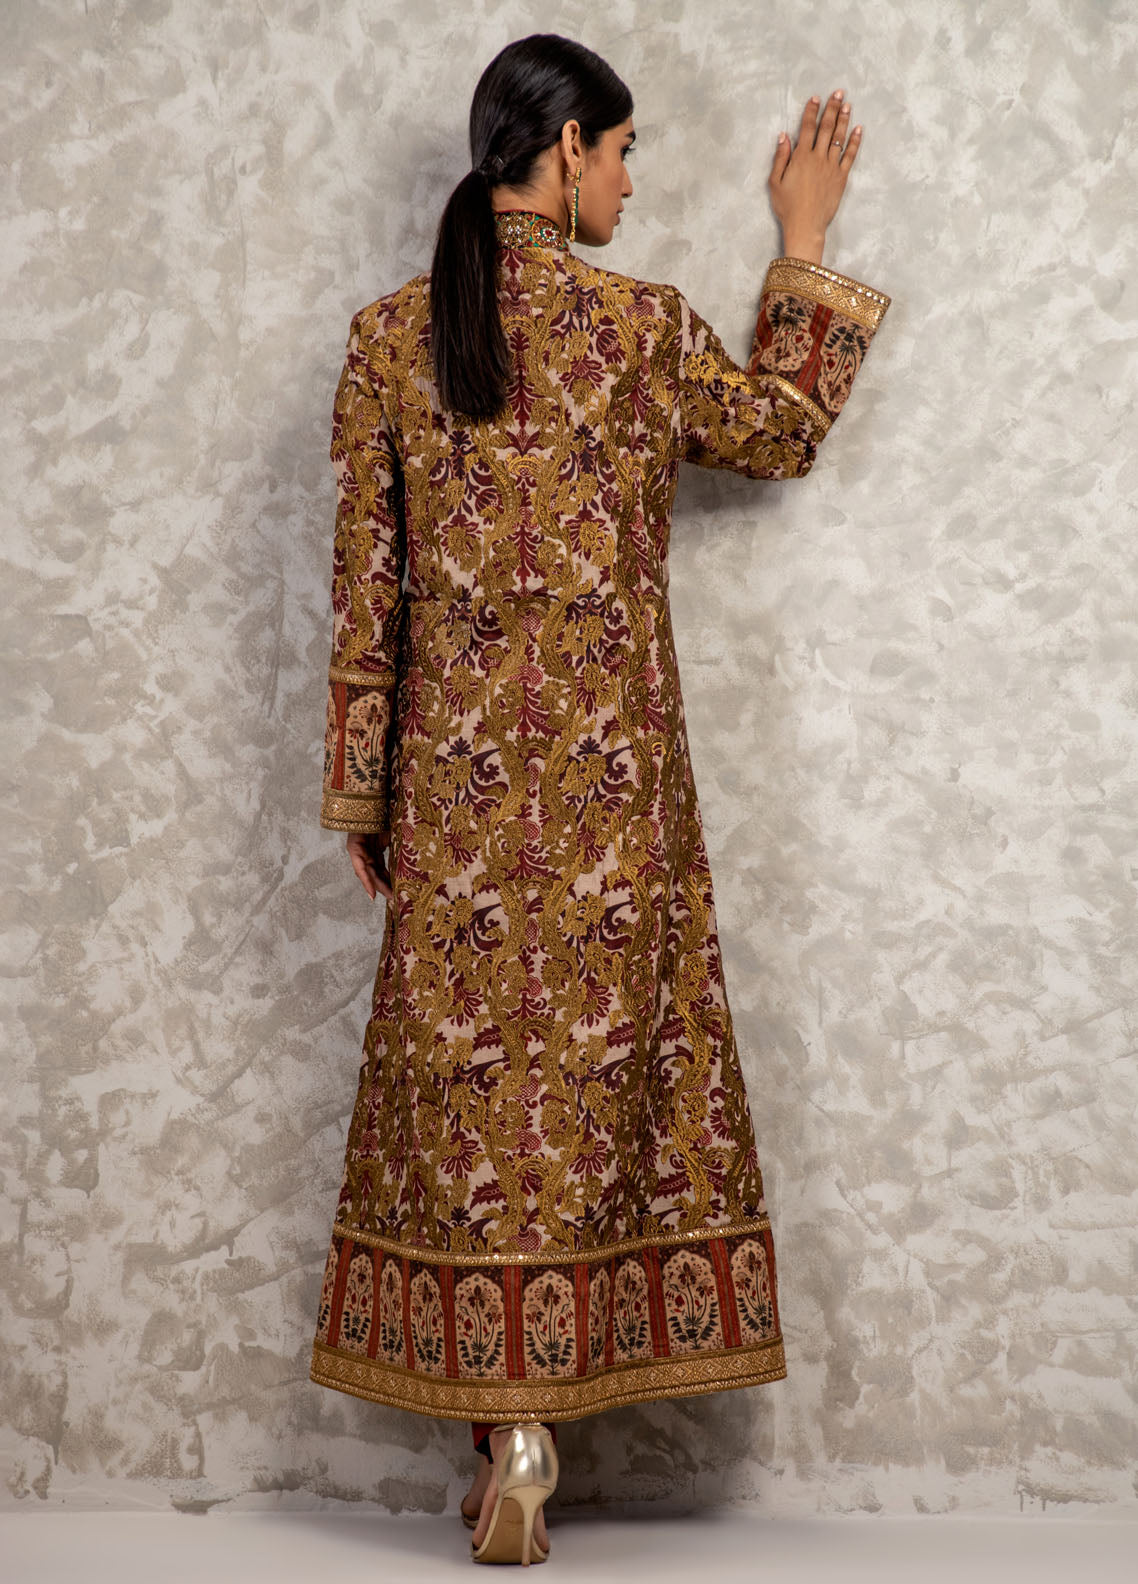 Shamaeel Ansari Luxury Pret Embroidered Silk Shirt AM-18